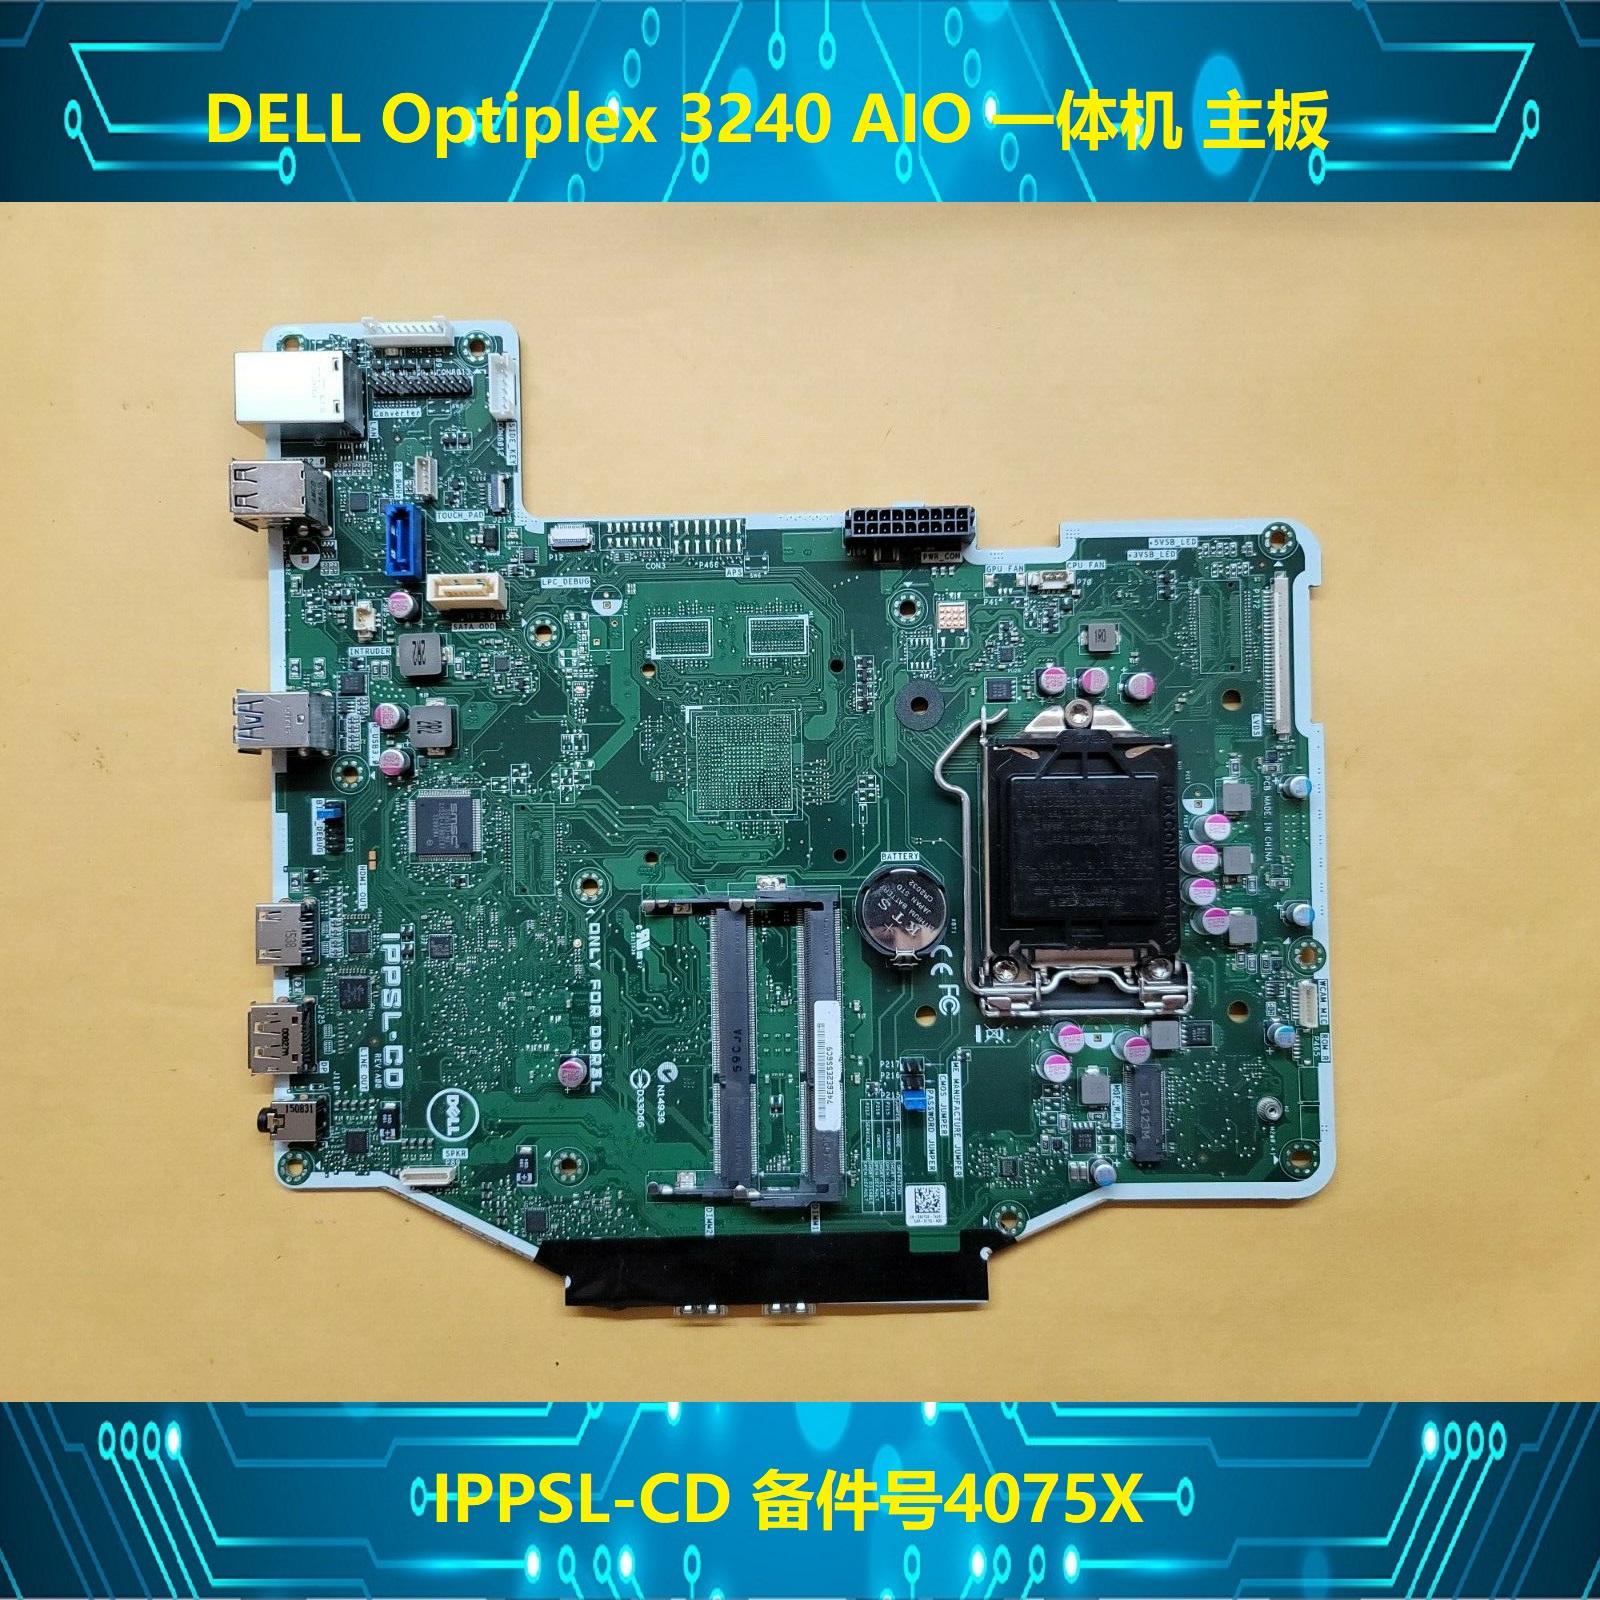  DELL OPTIPLEX 3240 AIO ο  IPPSL-CD  ǰ ȣ 4075X-